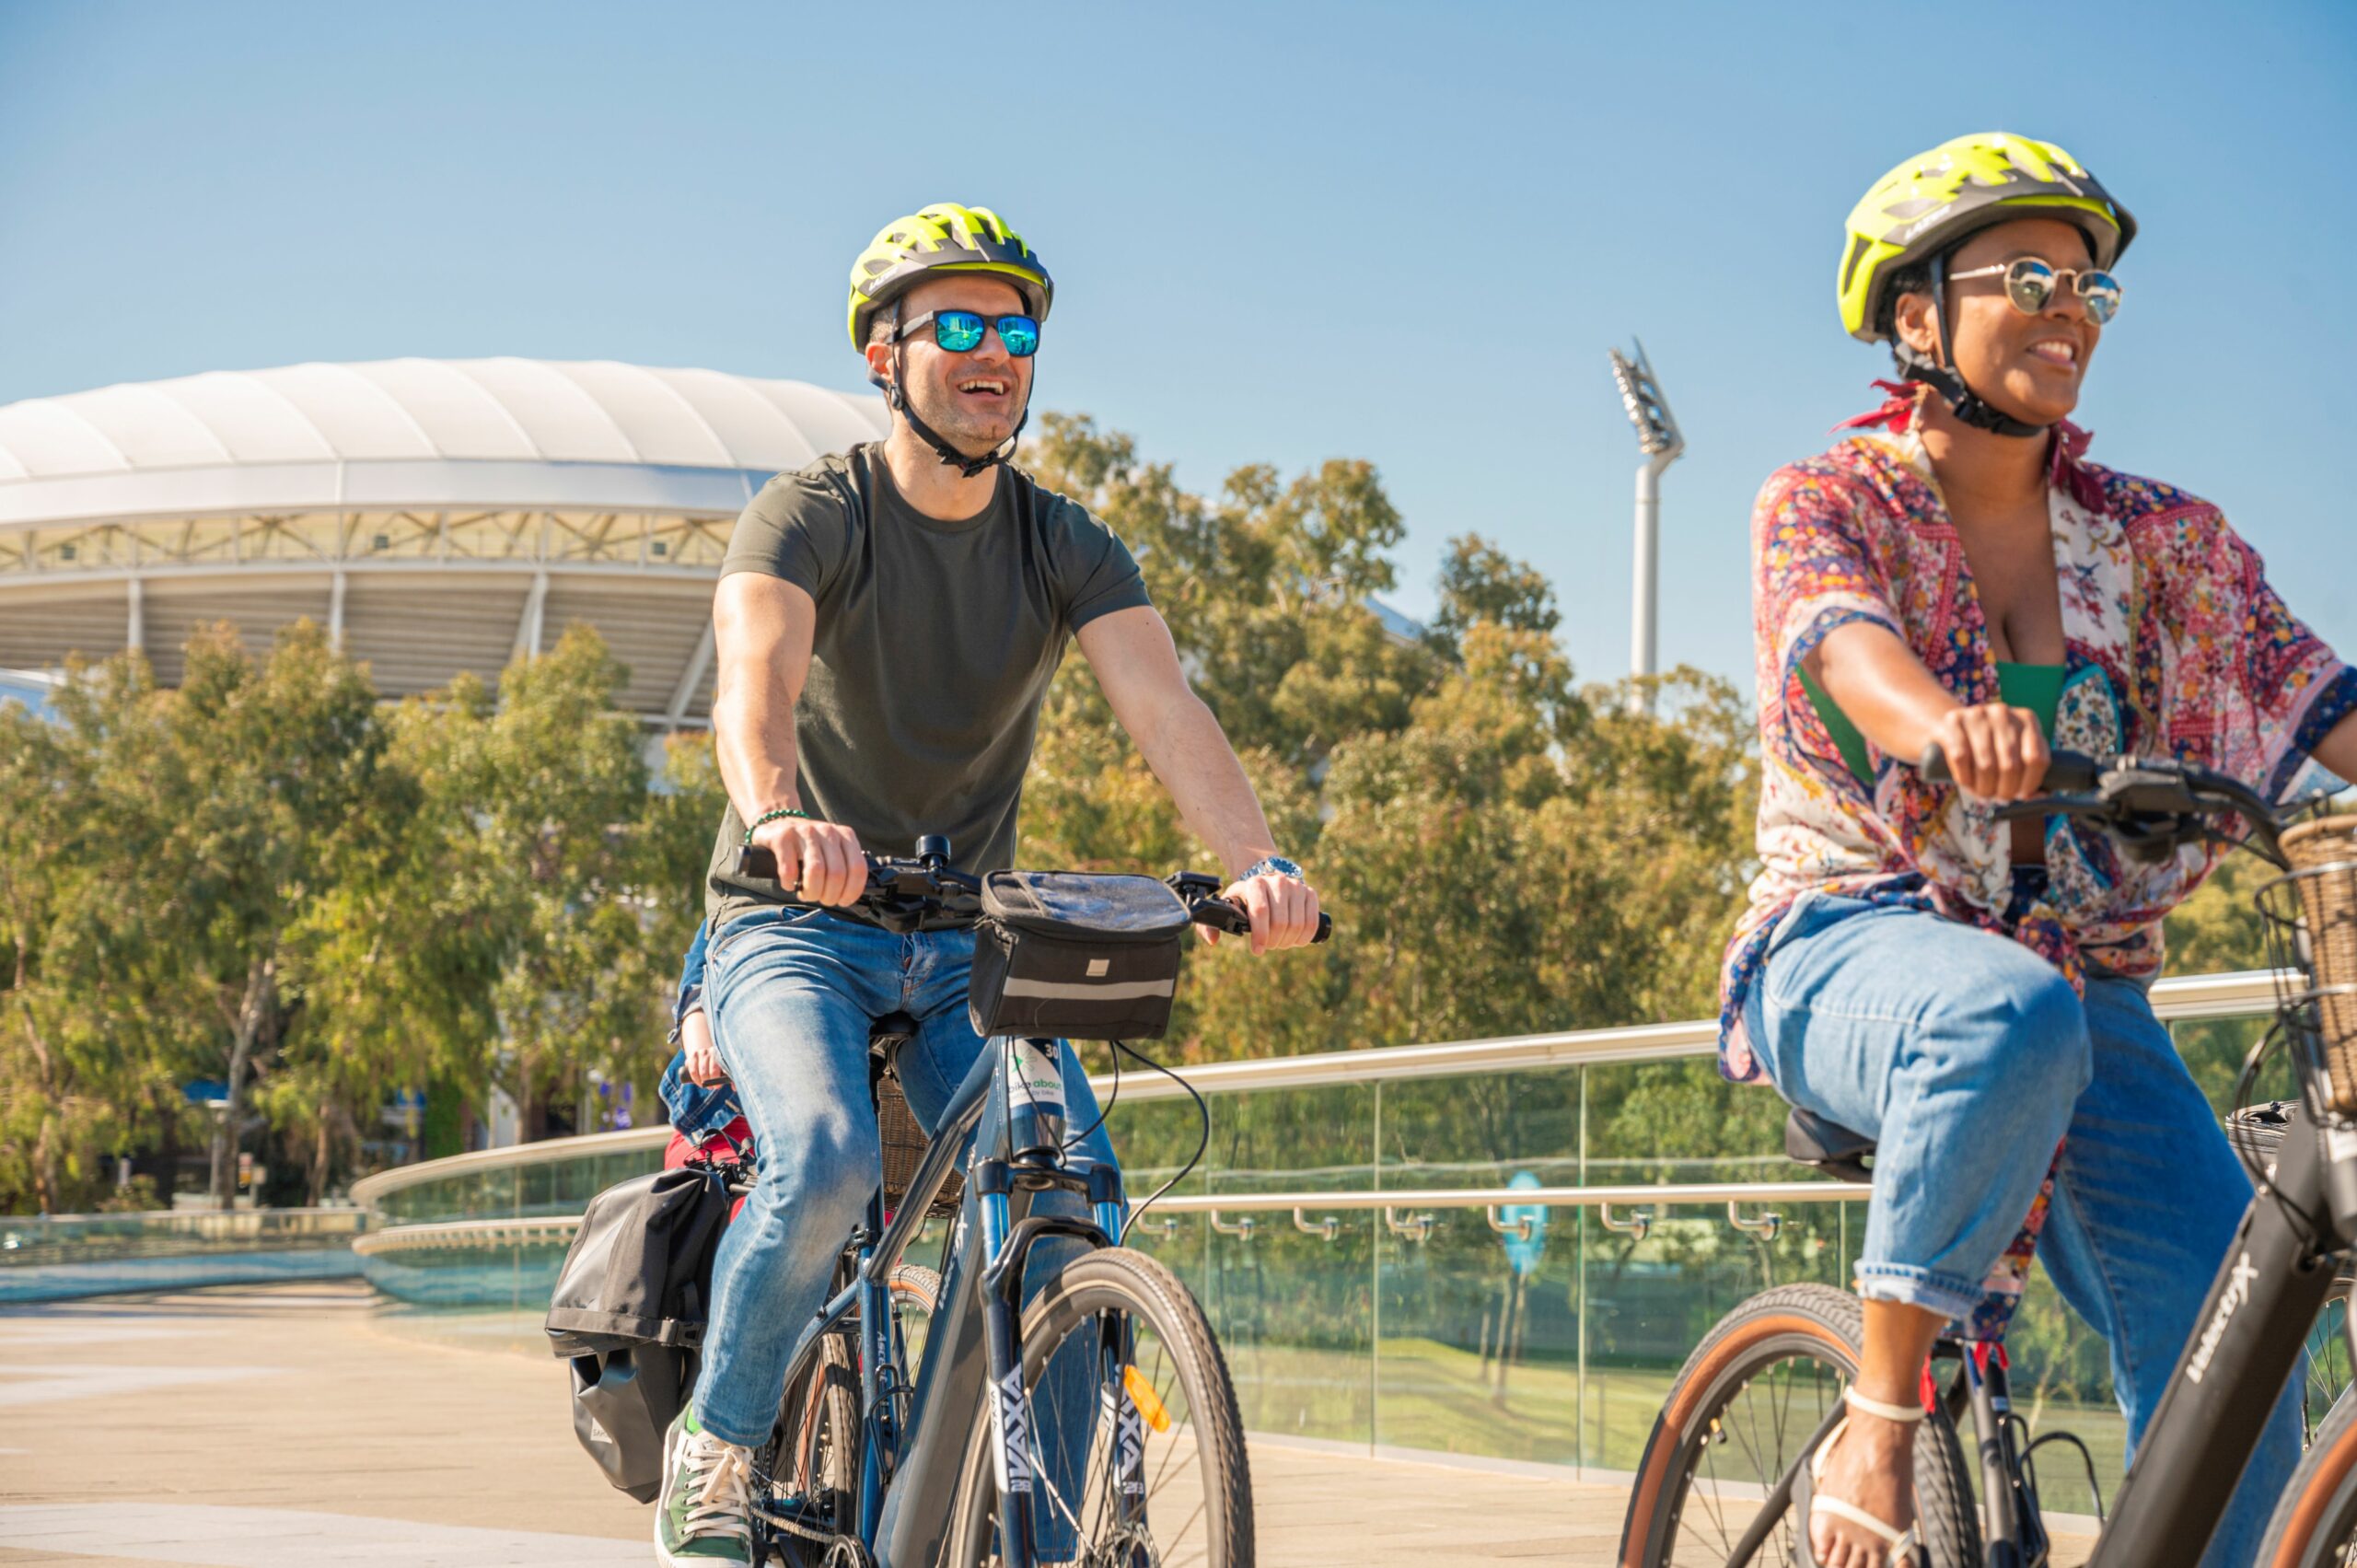 Adelaide City Scenic Electric Bike Tour